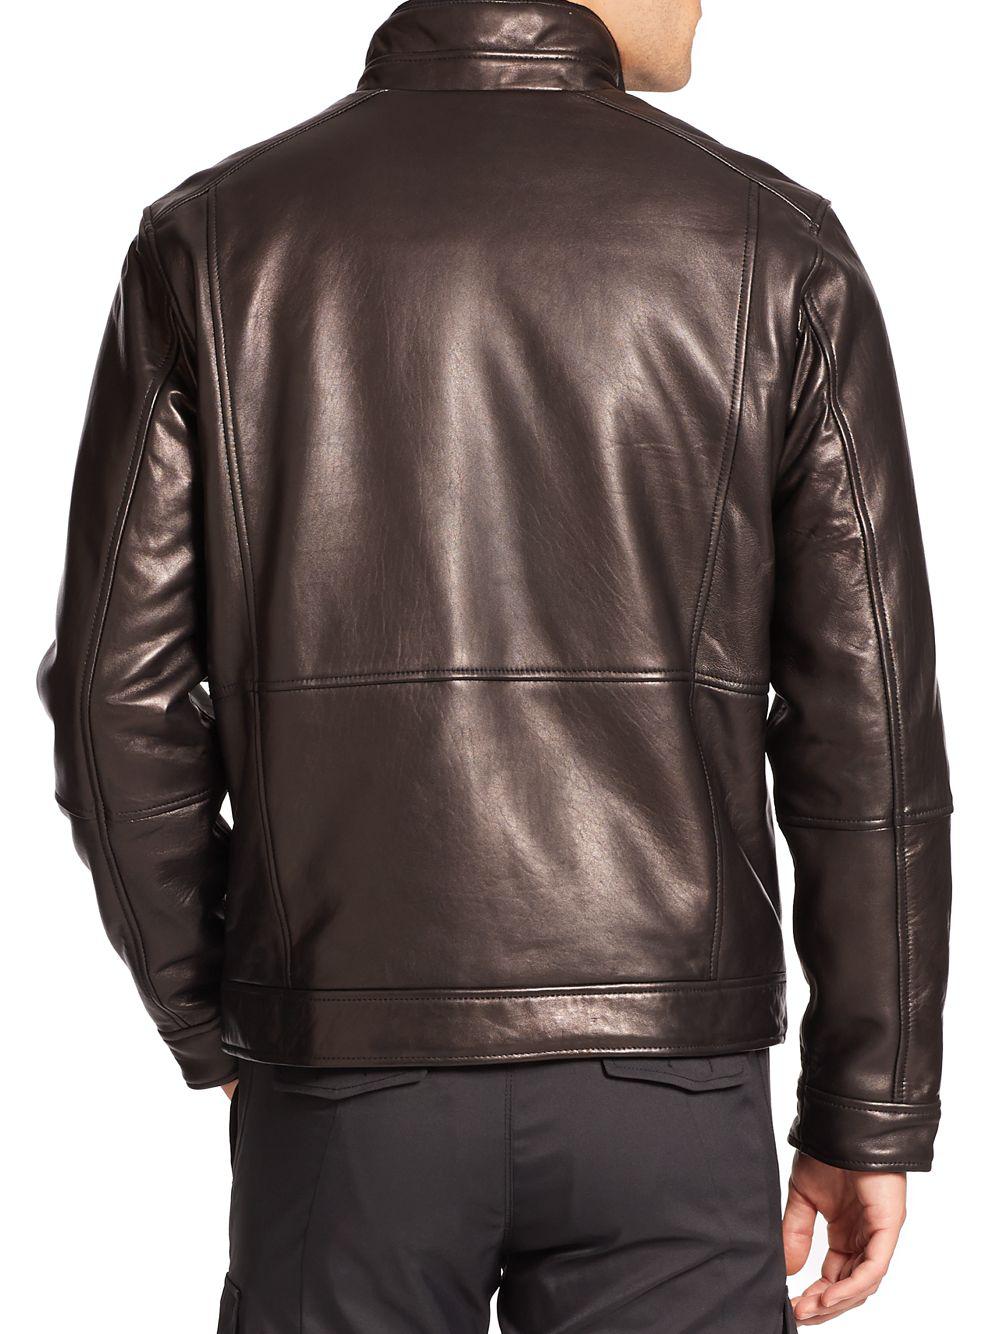 Saks Fifth Avenue Reversible Leather Jacket in Black for Men - Lyst